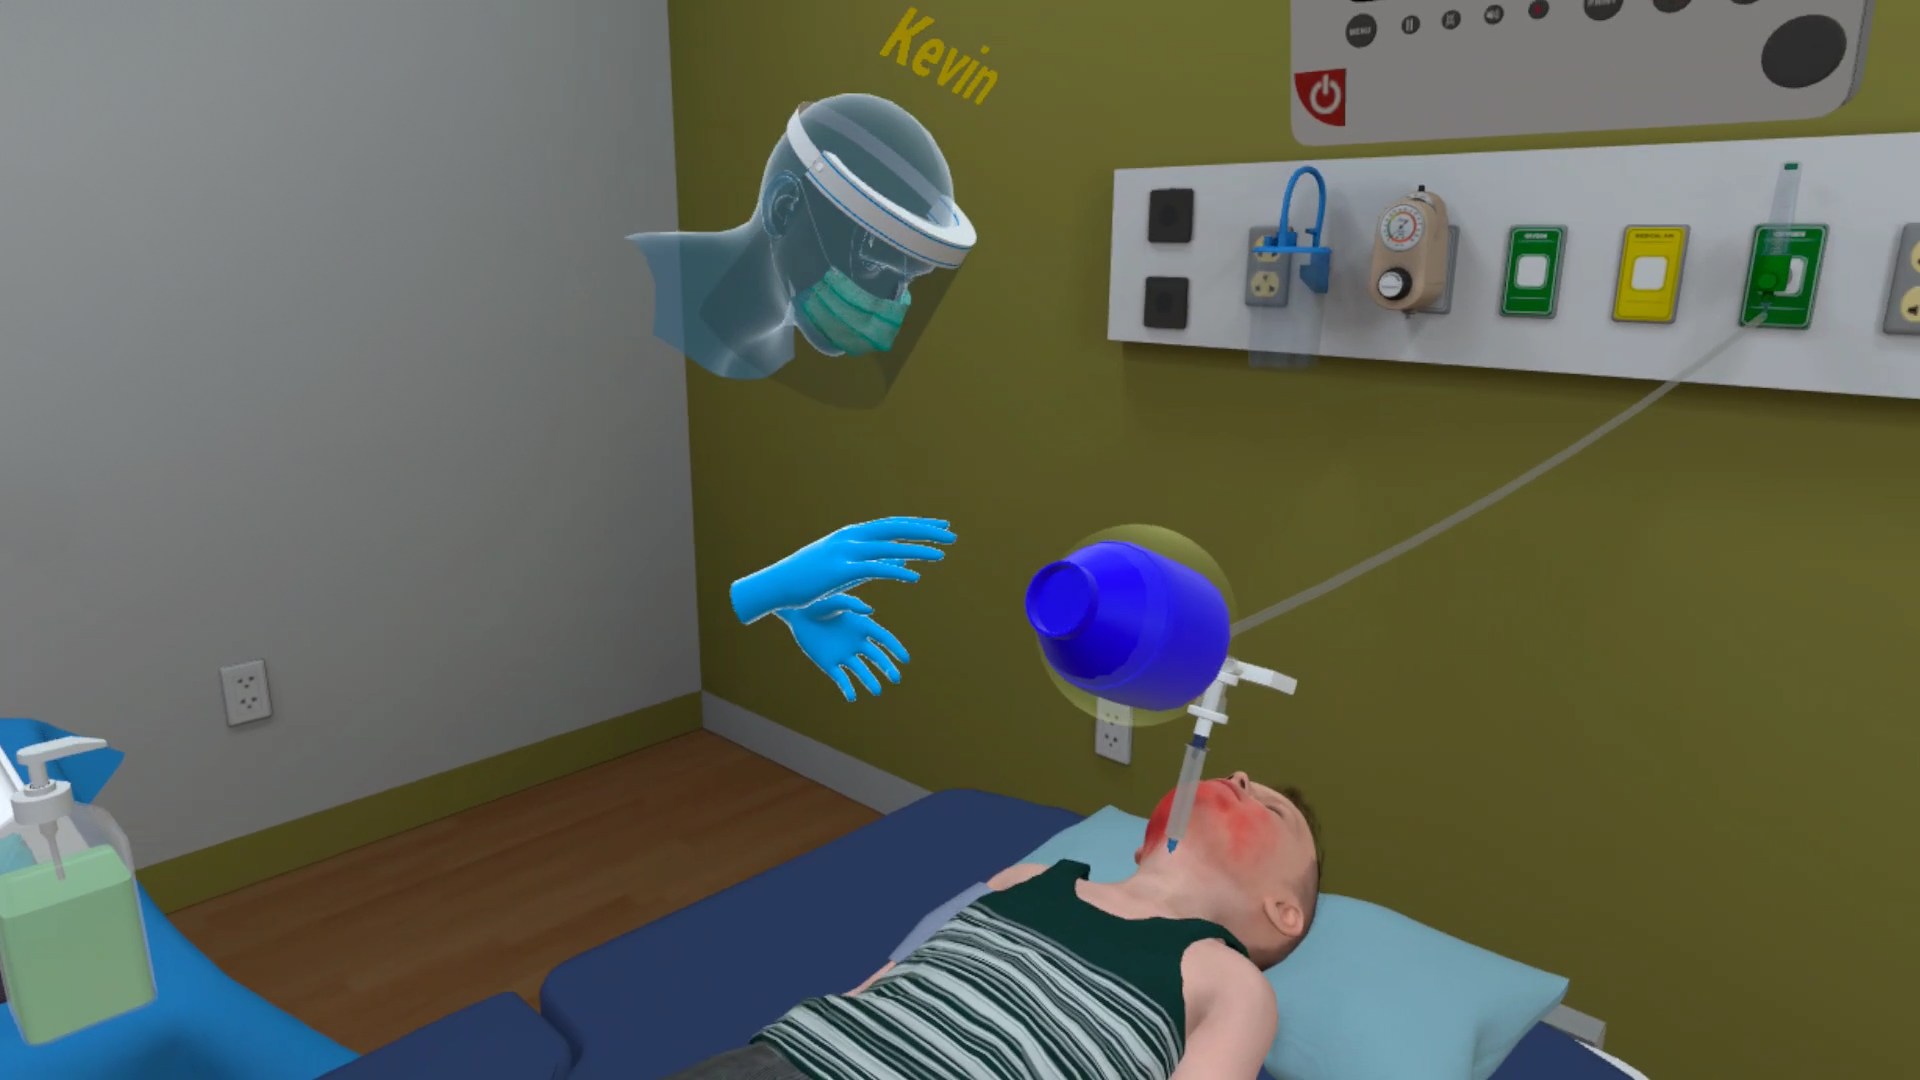 VR simulation